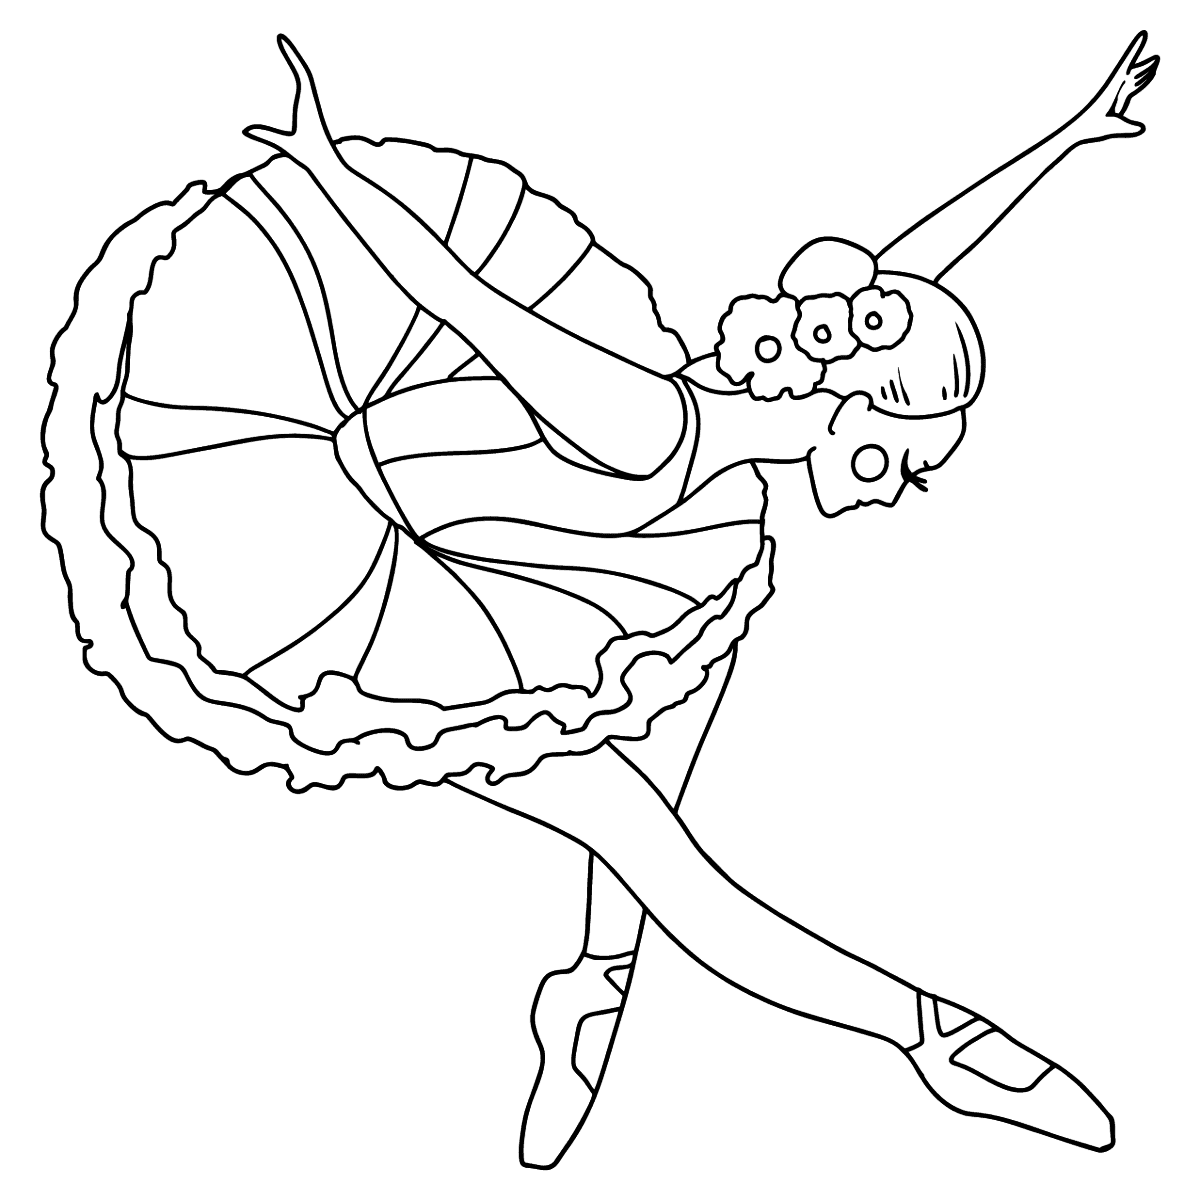 Desenho colorir barbie bailarina